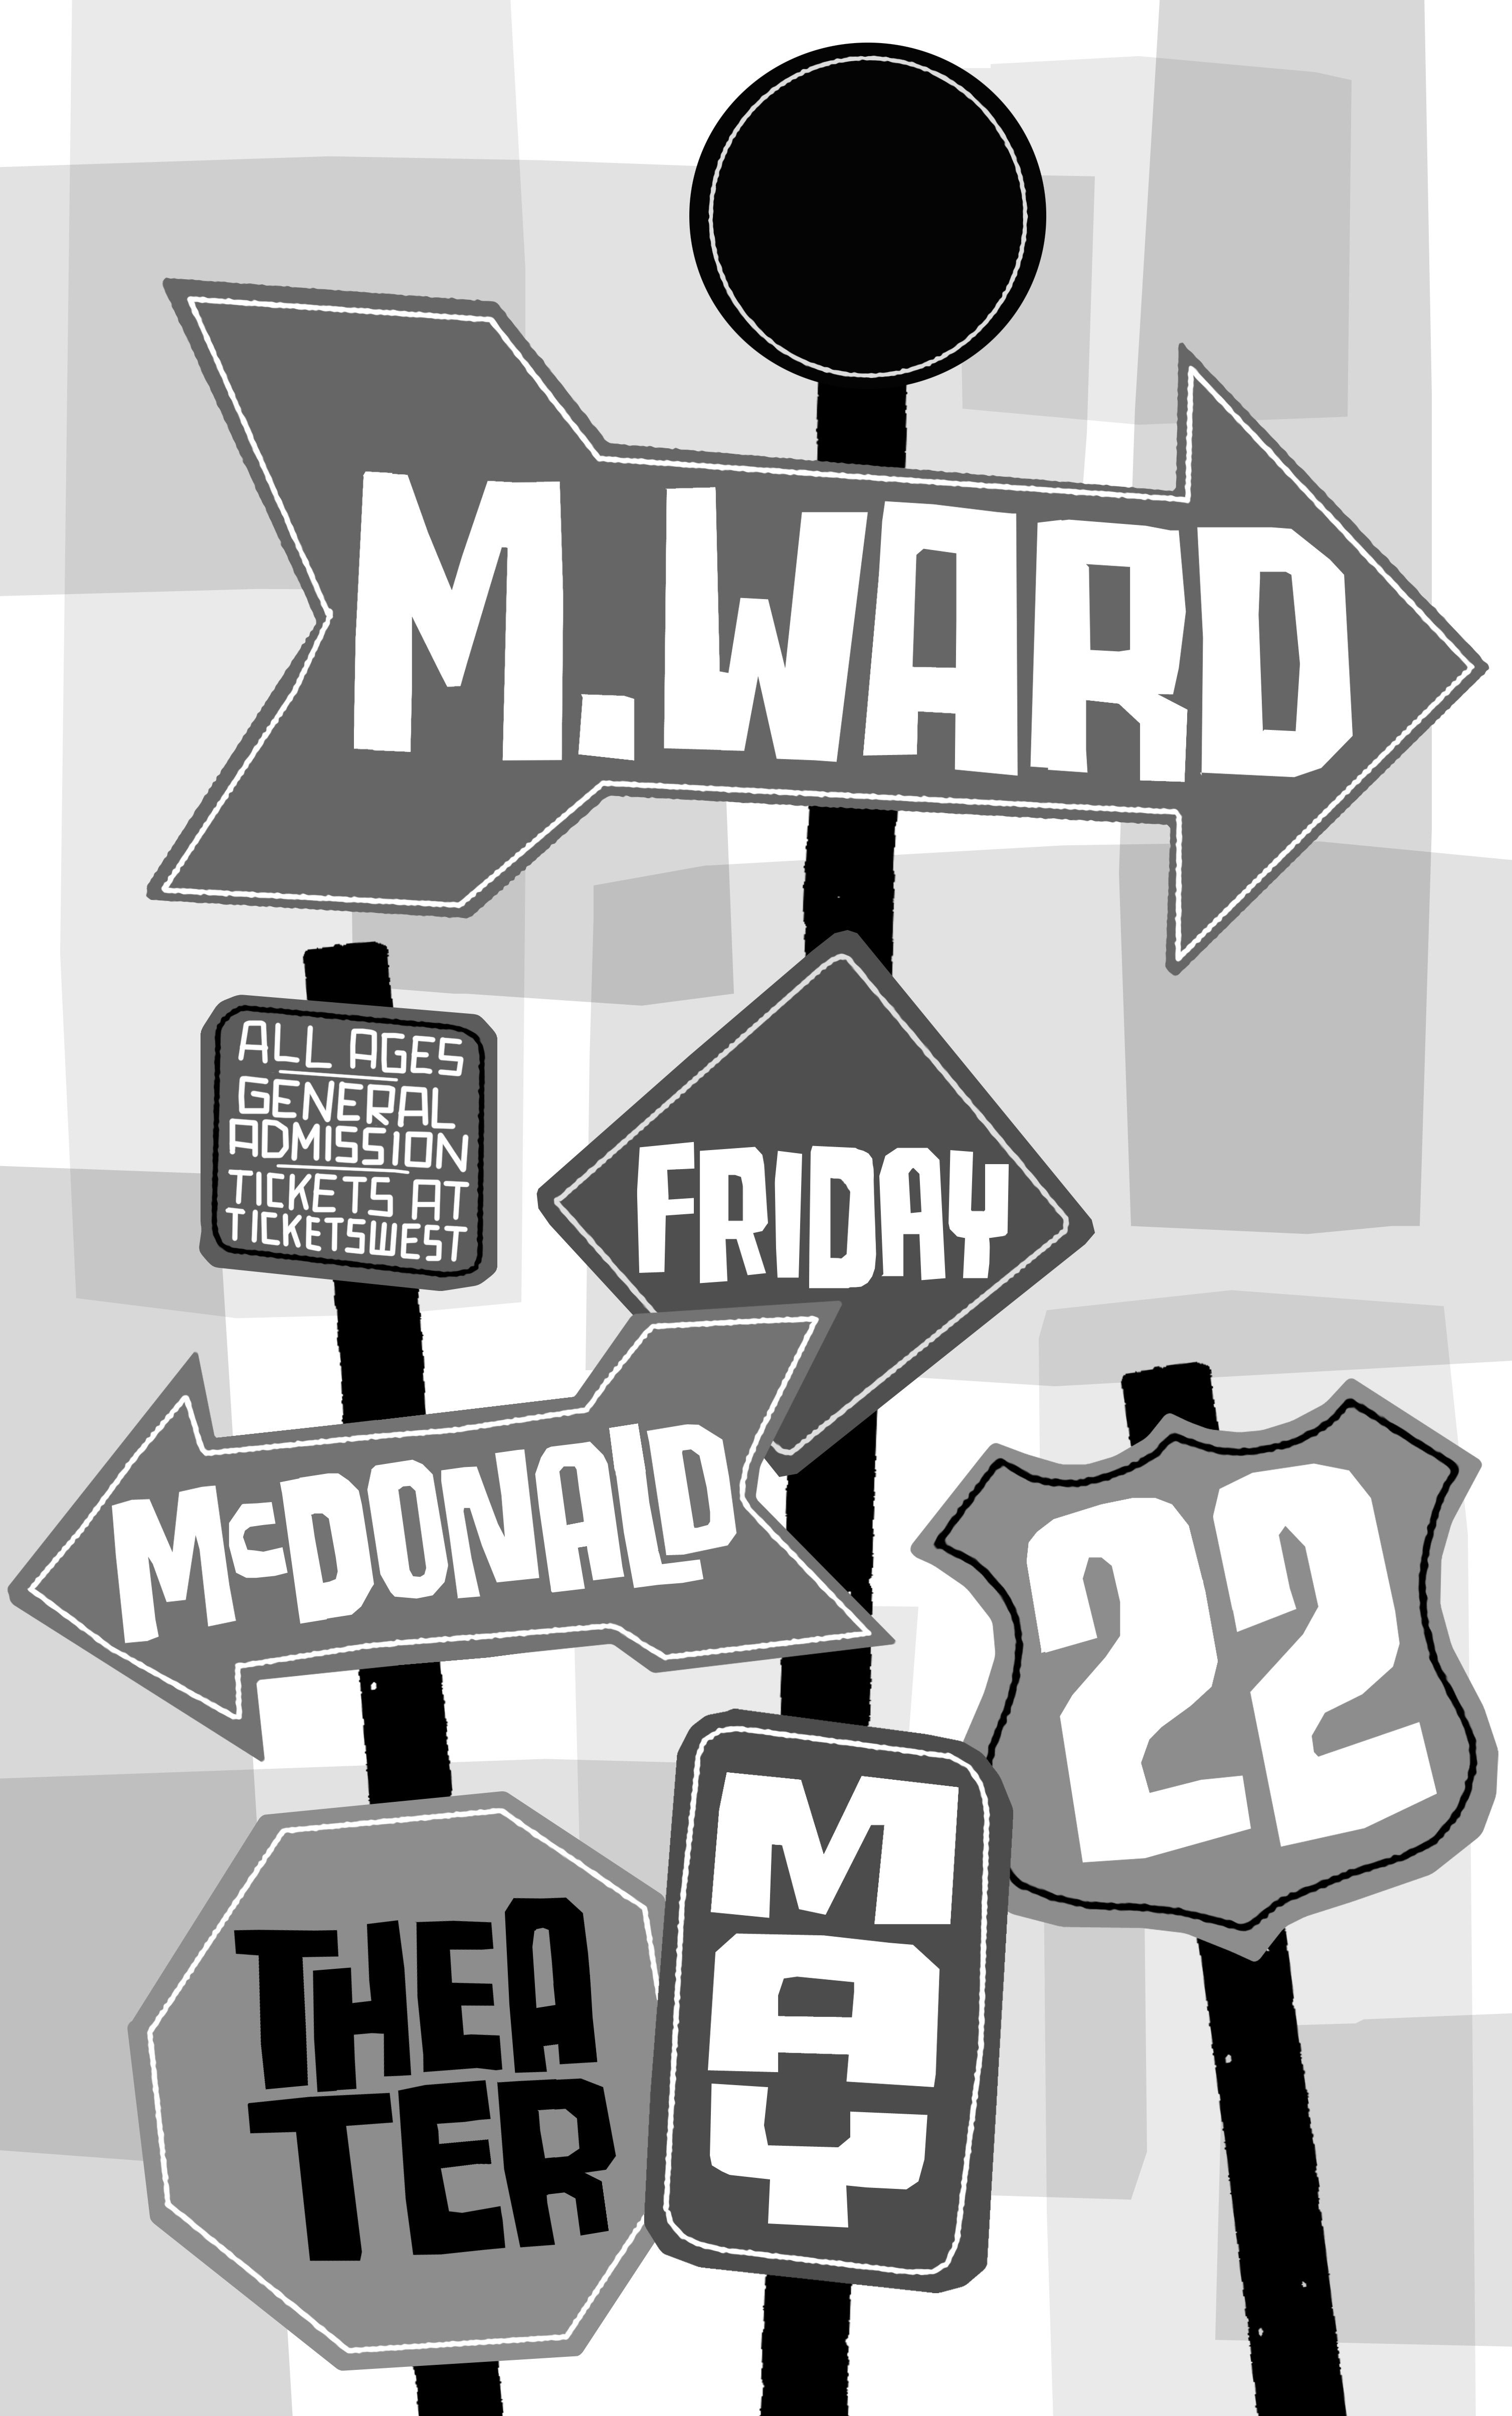 MXP-150.12 M.ward 2009 Mcdonald Theater  May 22 Concert Poster